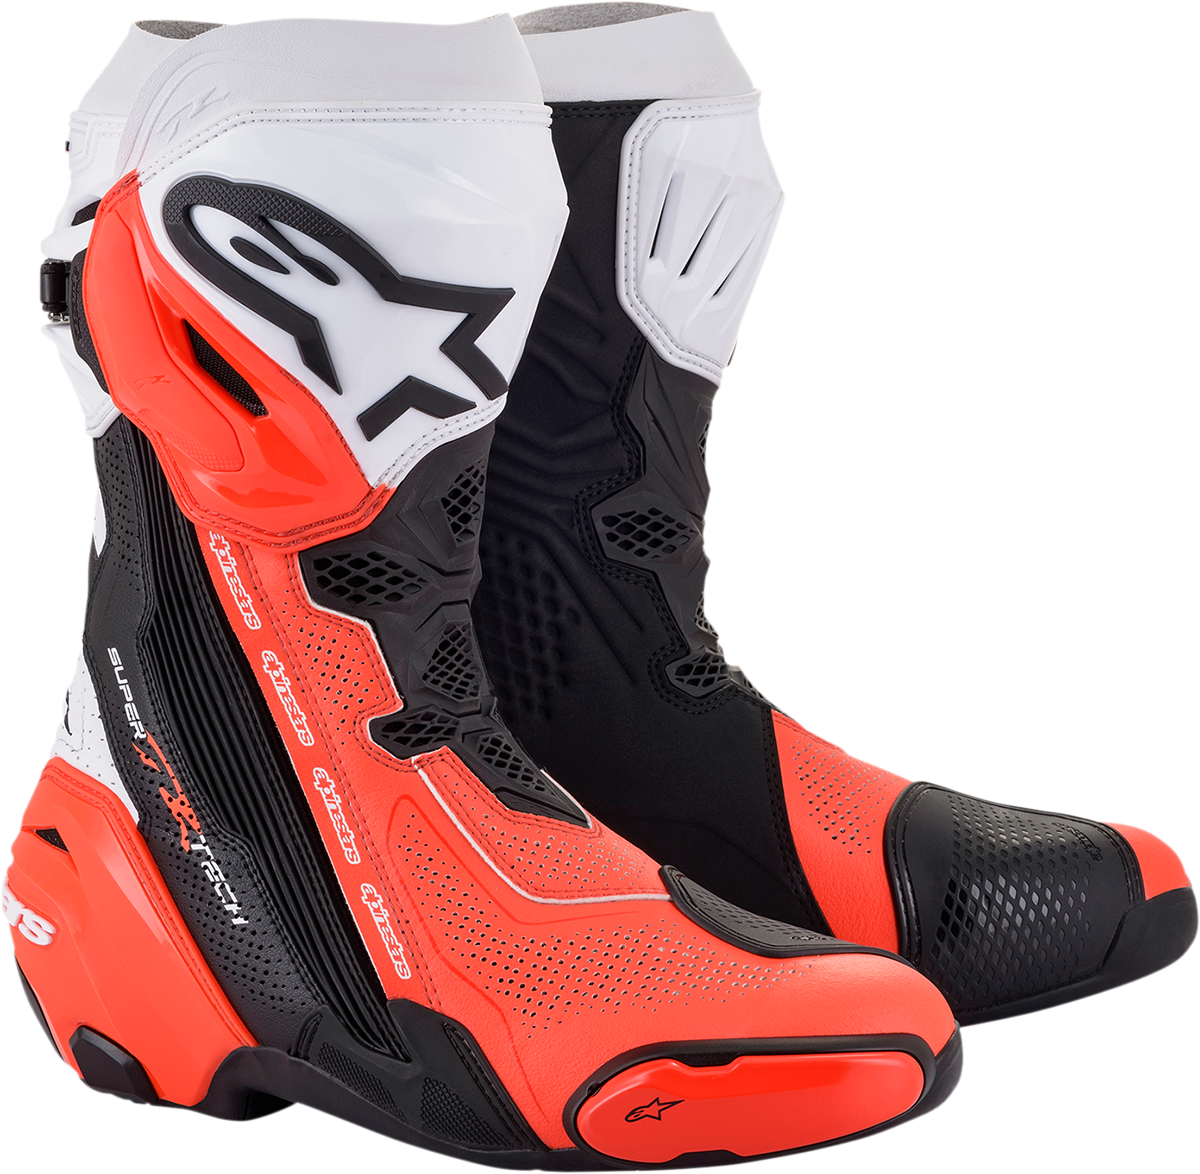 ALPINESTARS Supertech V Boots - Black/Fluo Red/White - US 10.5 / EU 45 2220121-124-45